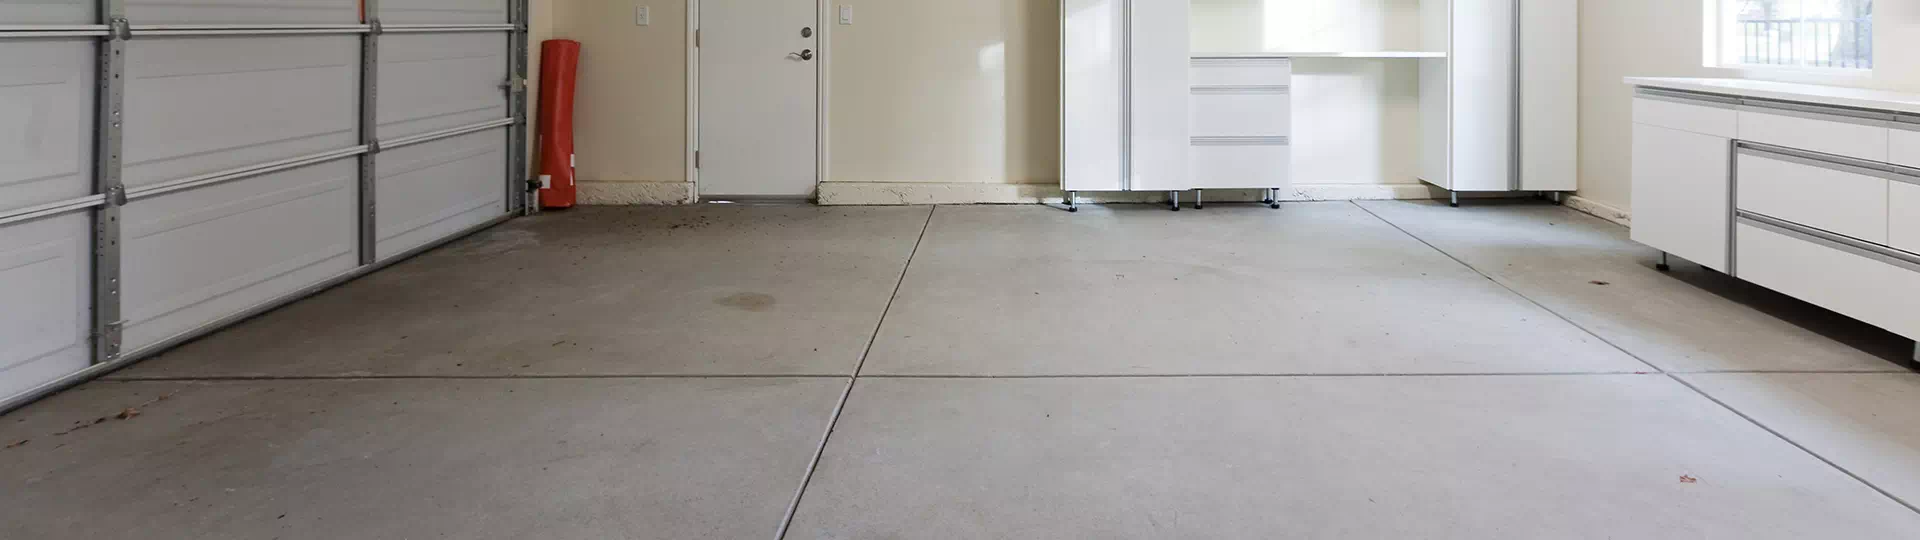 How to Clean Garage Floors - Simple Green